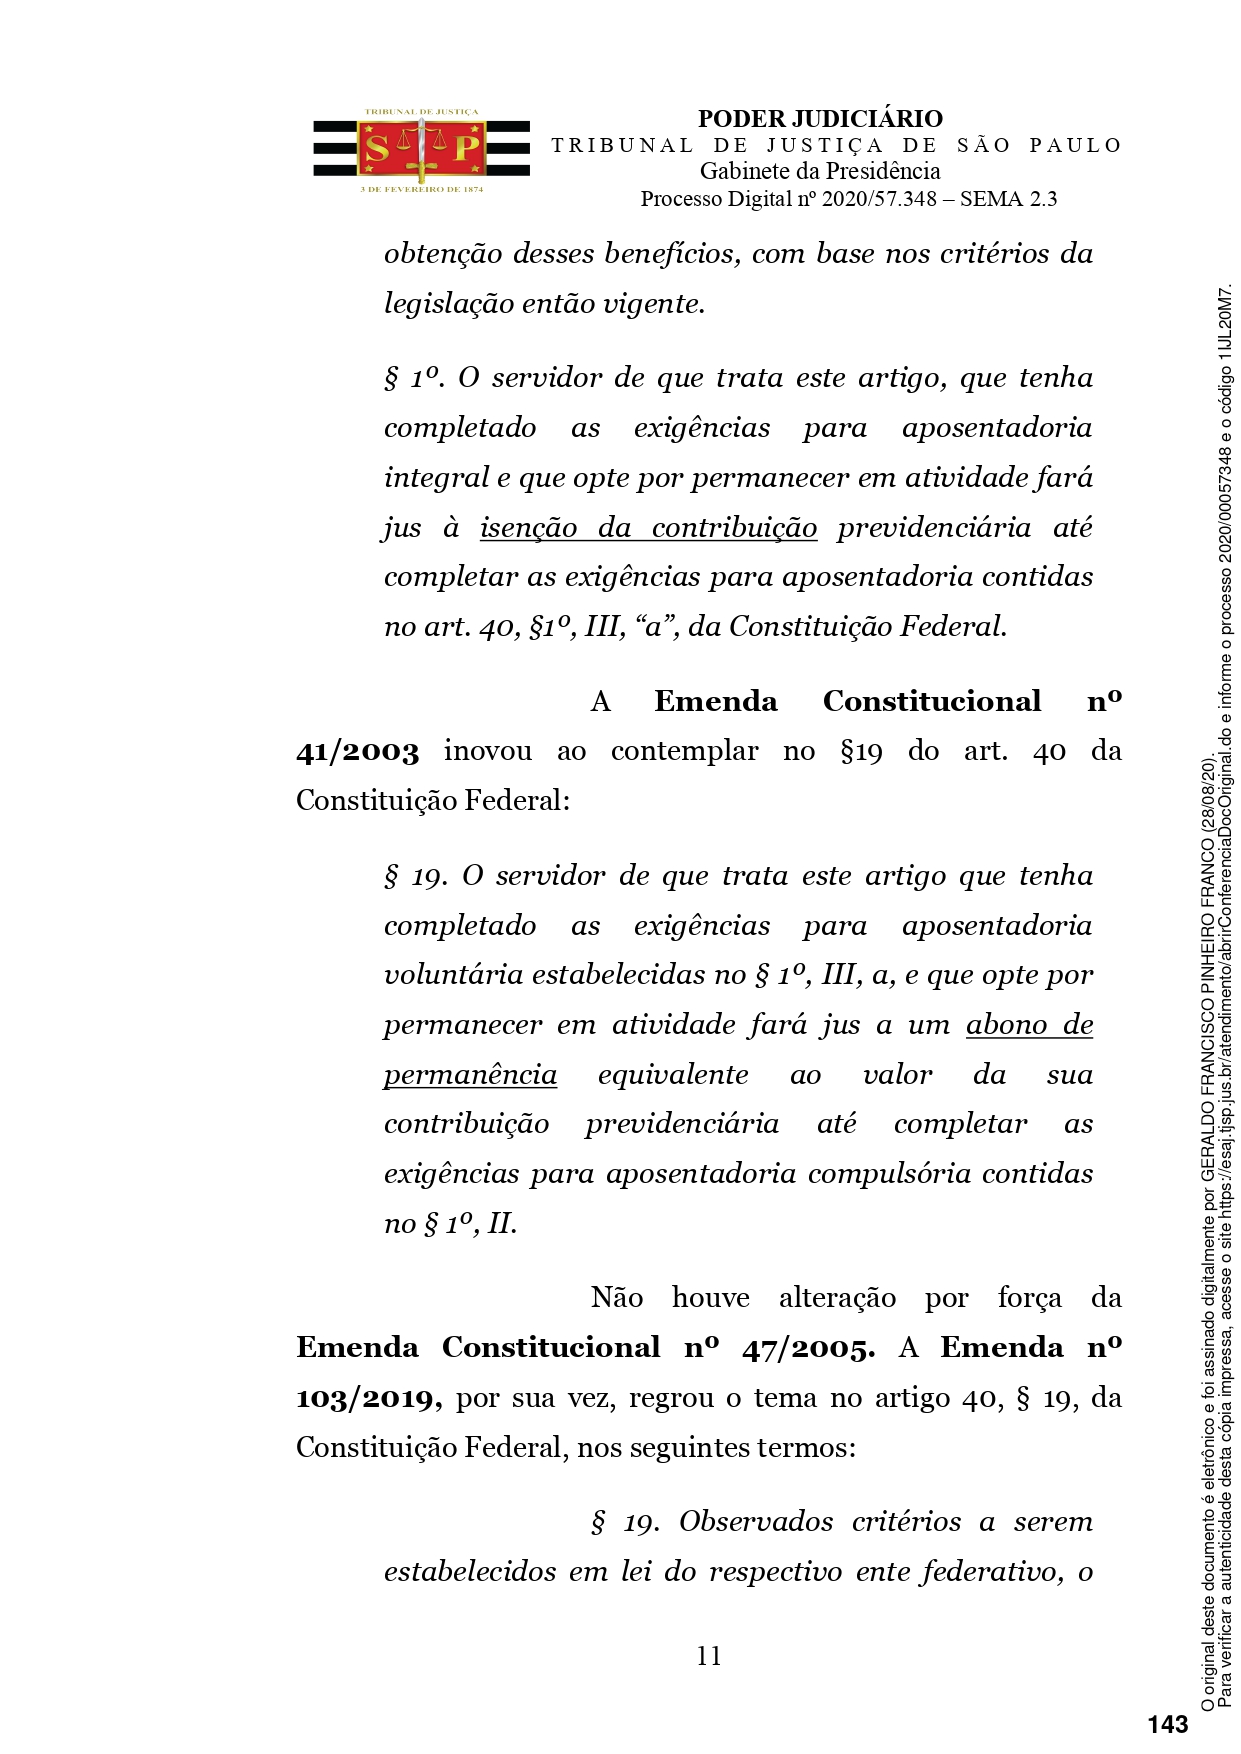 reforma-previdencia-tj-sp_page-0011.jpg